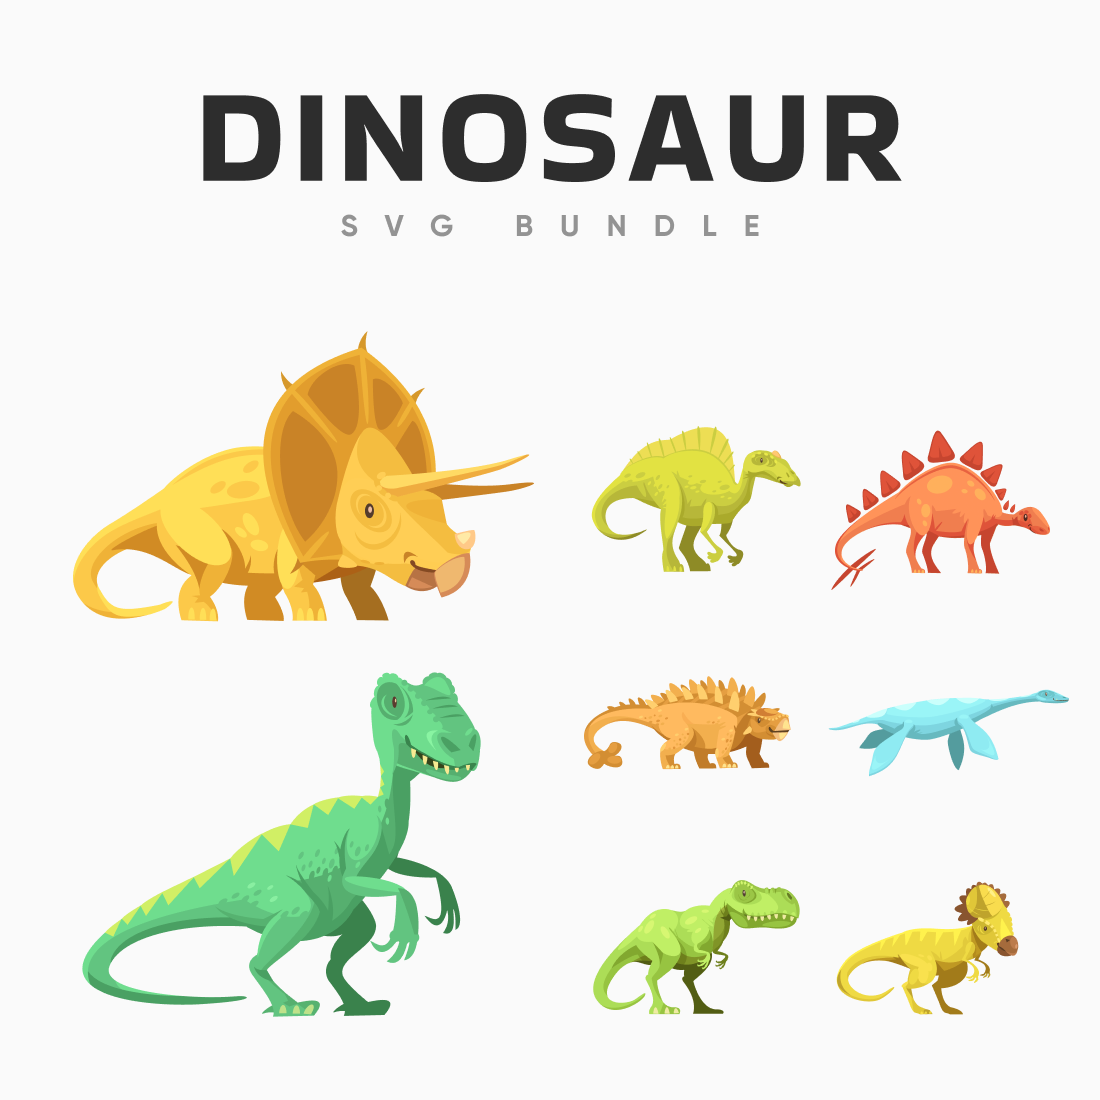 Dinosaur svg bundle main cover.